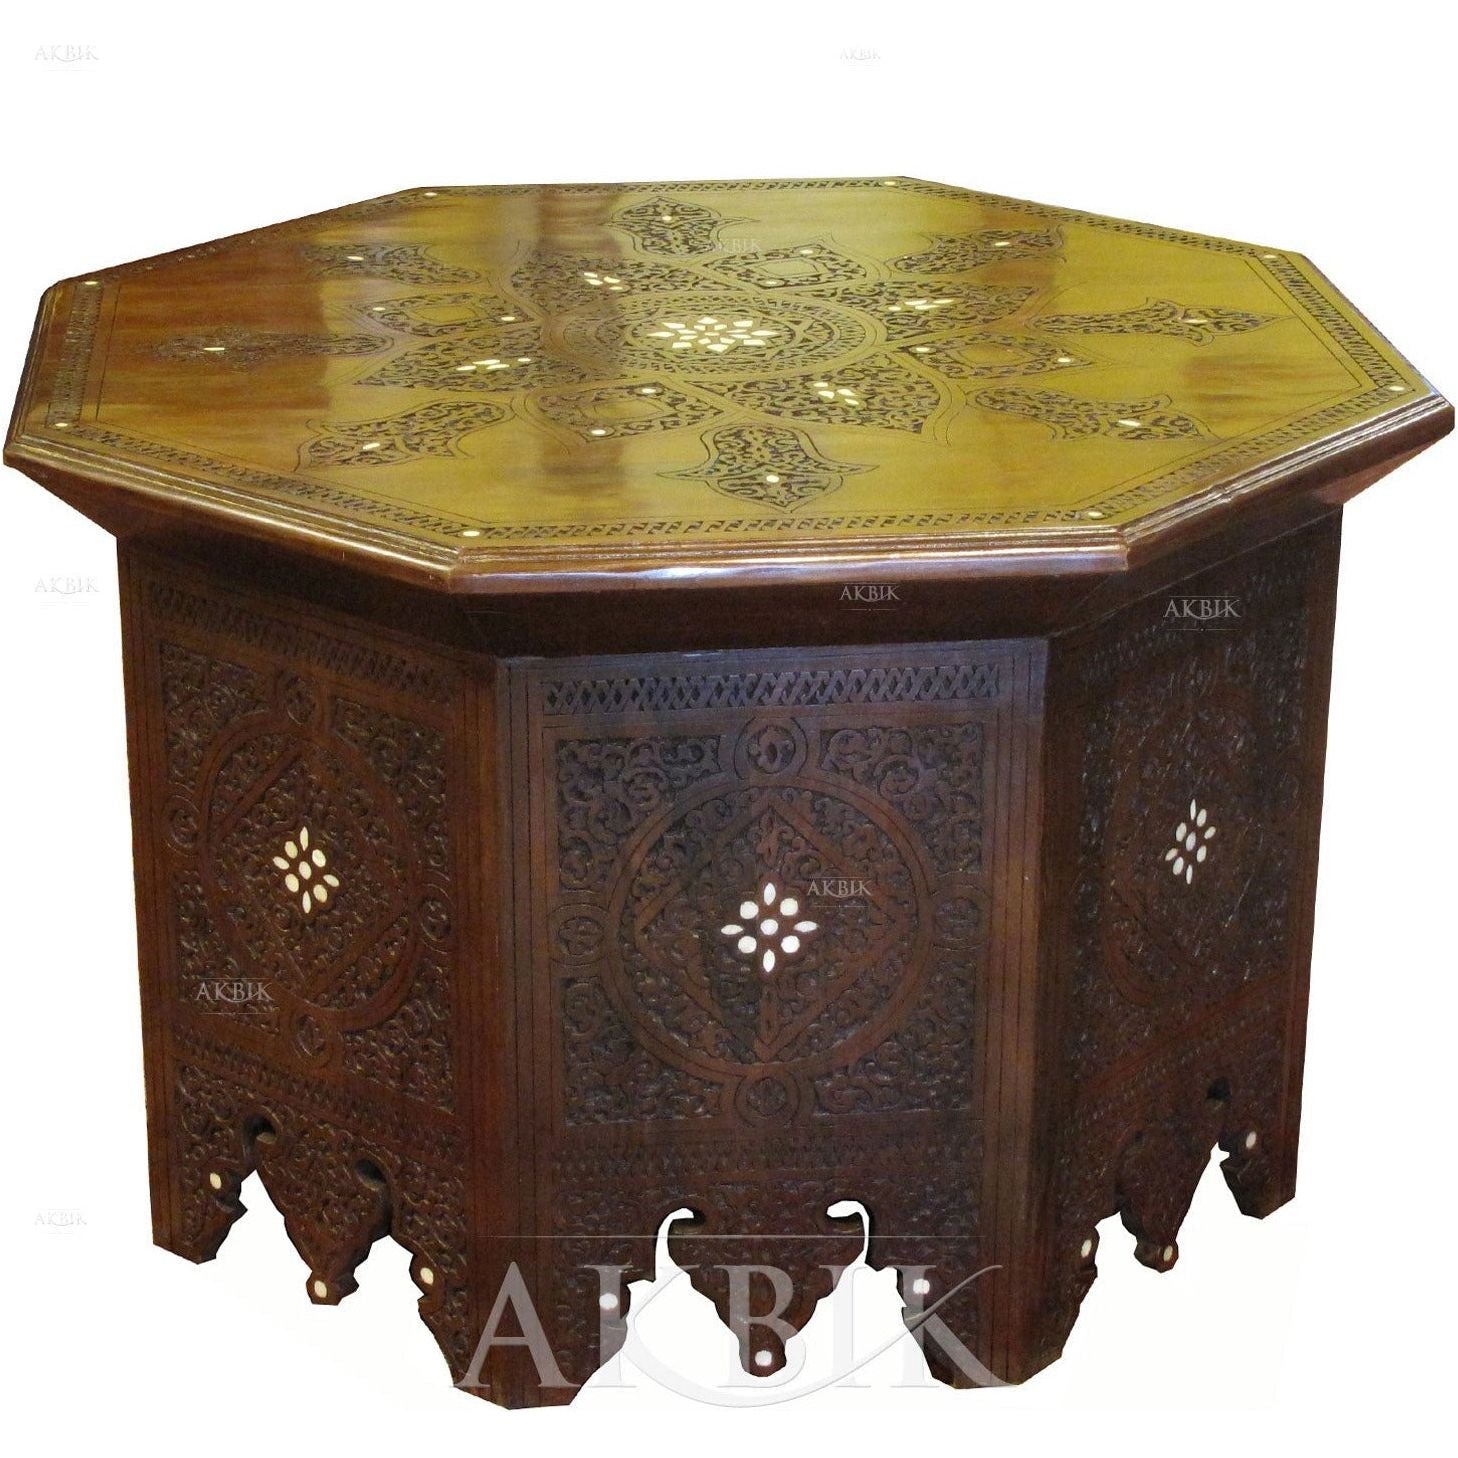 GRANADA COFFEE TABLE - AKBIK Furniture & Design